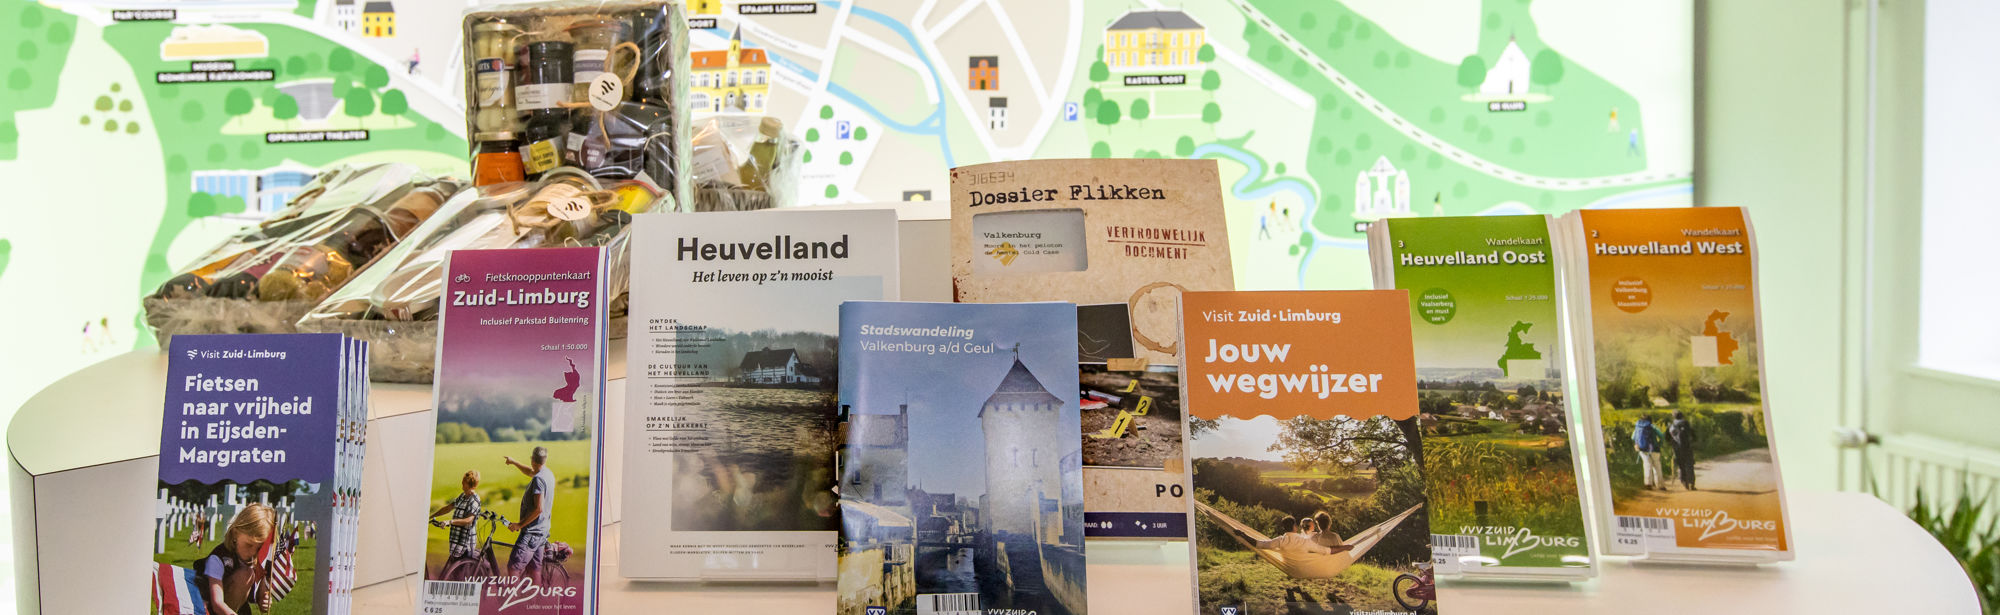 Diverse Visit Zuid-Limburg brochures uitgestald in de Visit Zuid-Limburg Experience in Valkenburg